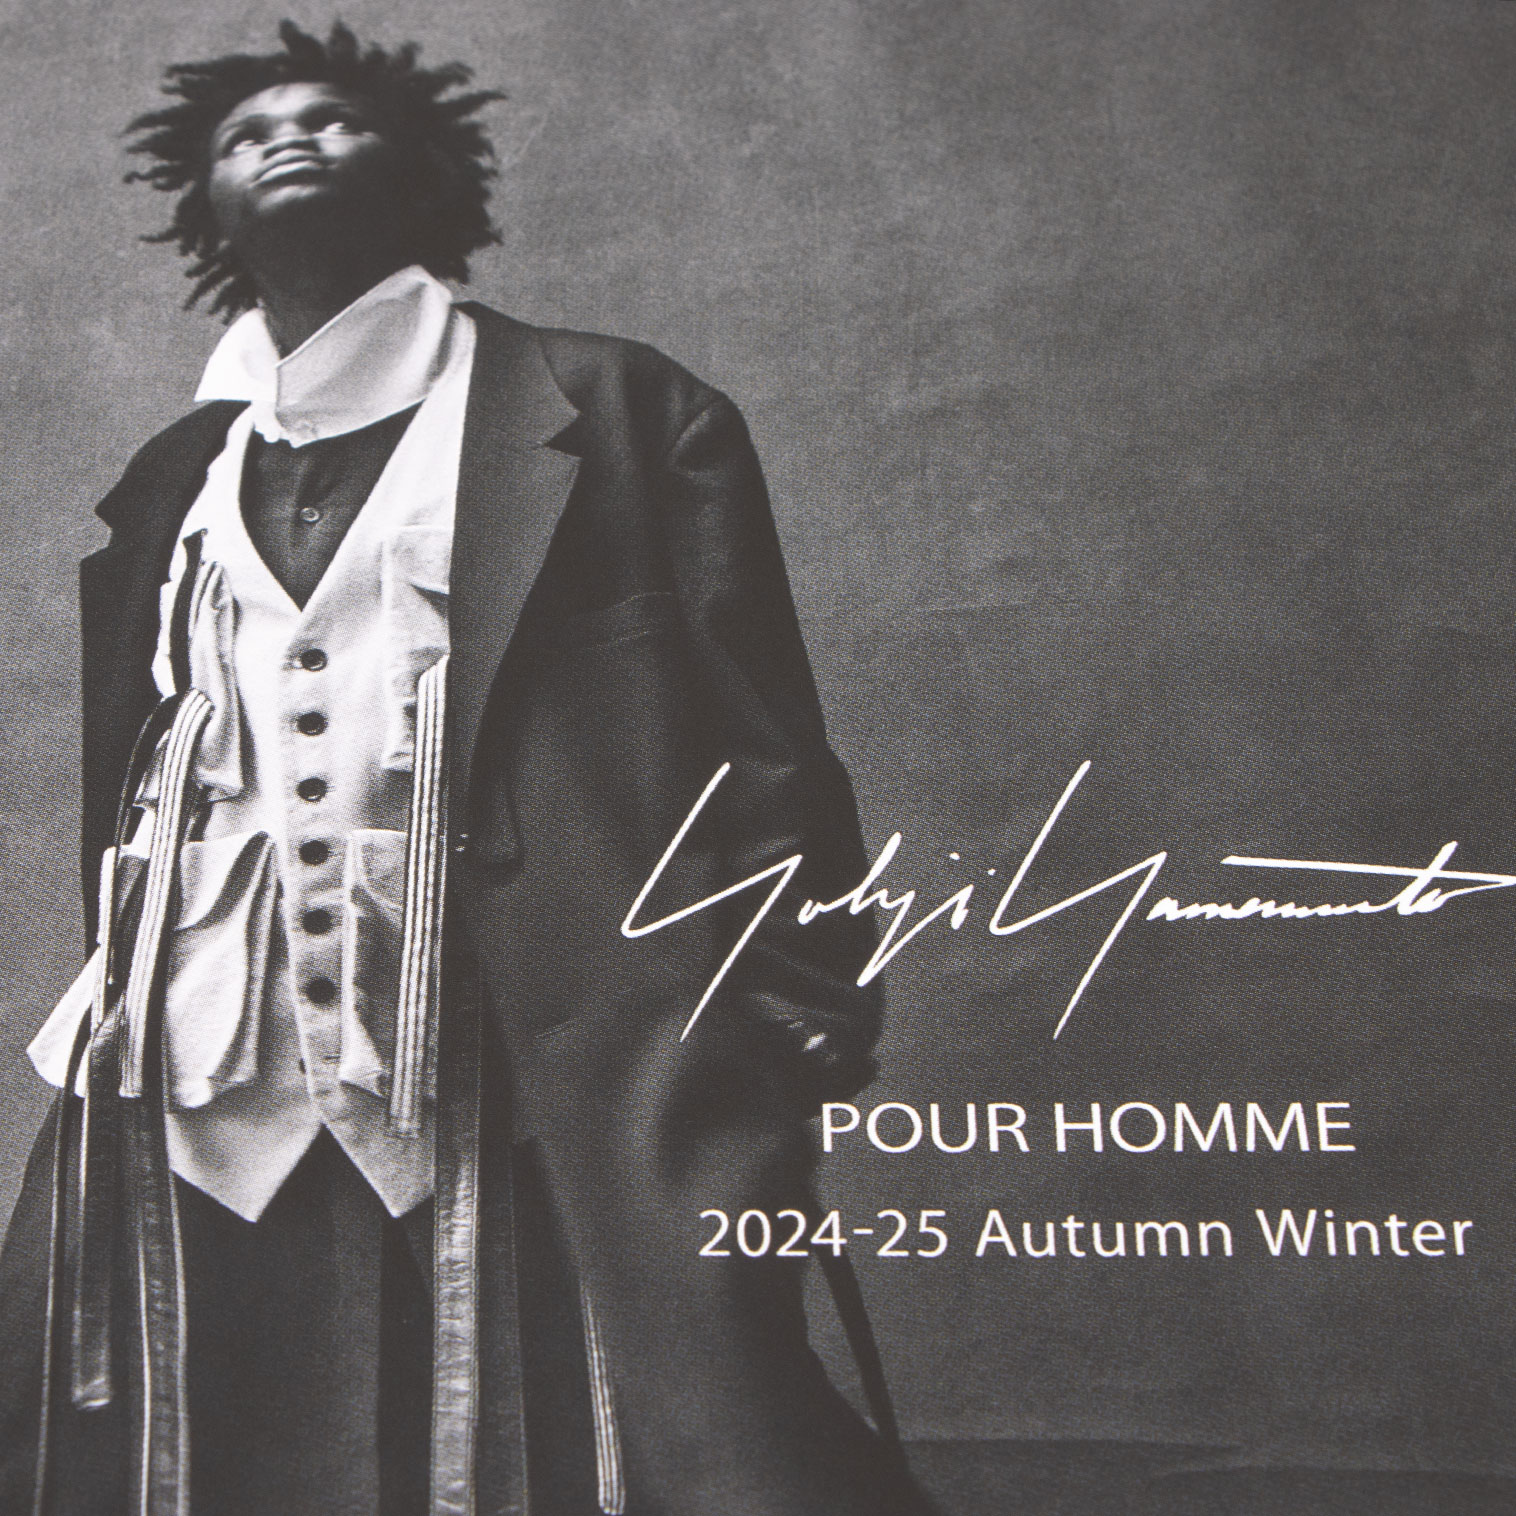 Yohji Yamamoto POUR HOMME 2024-25 Autumn Winter Invitation Card